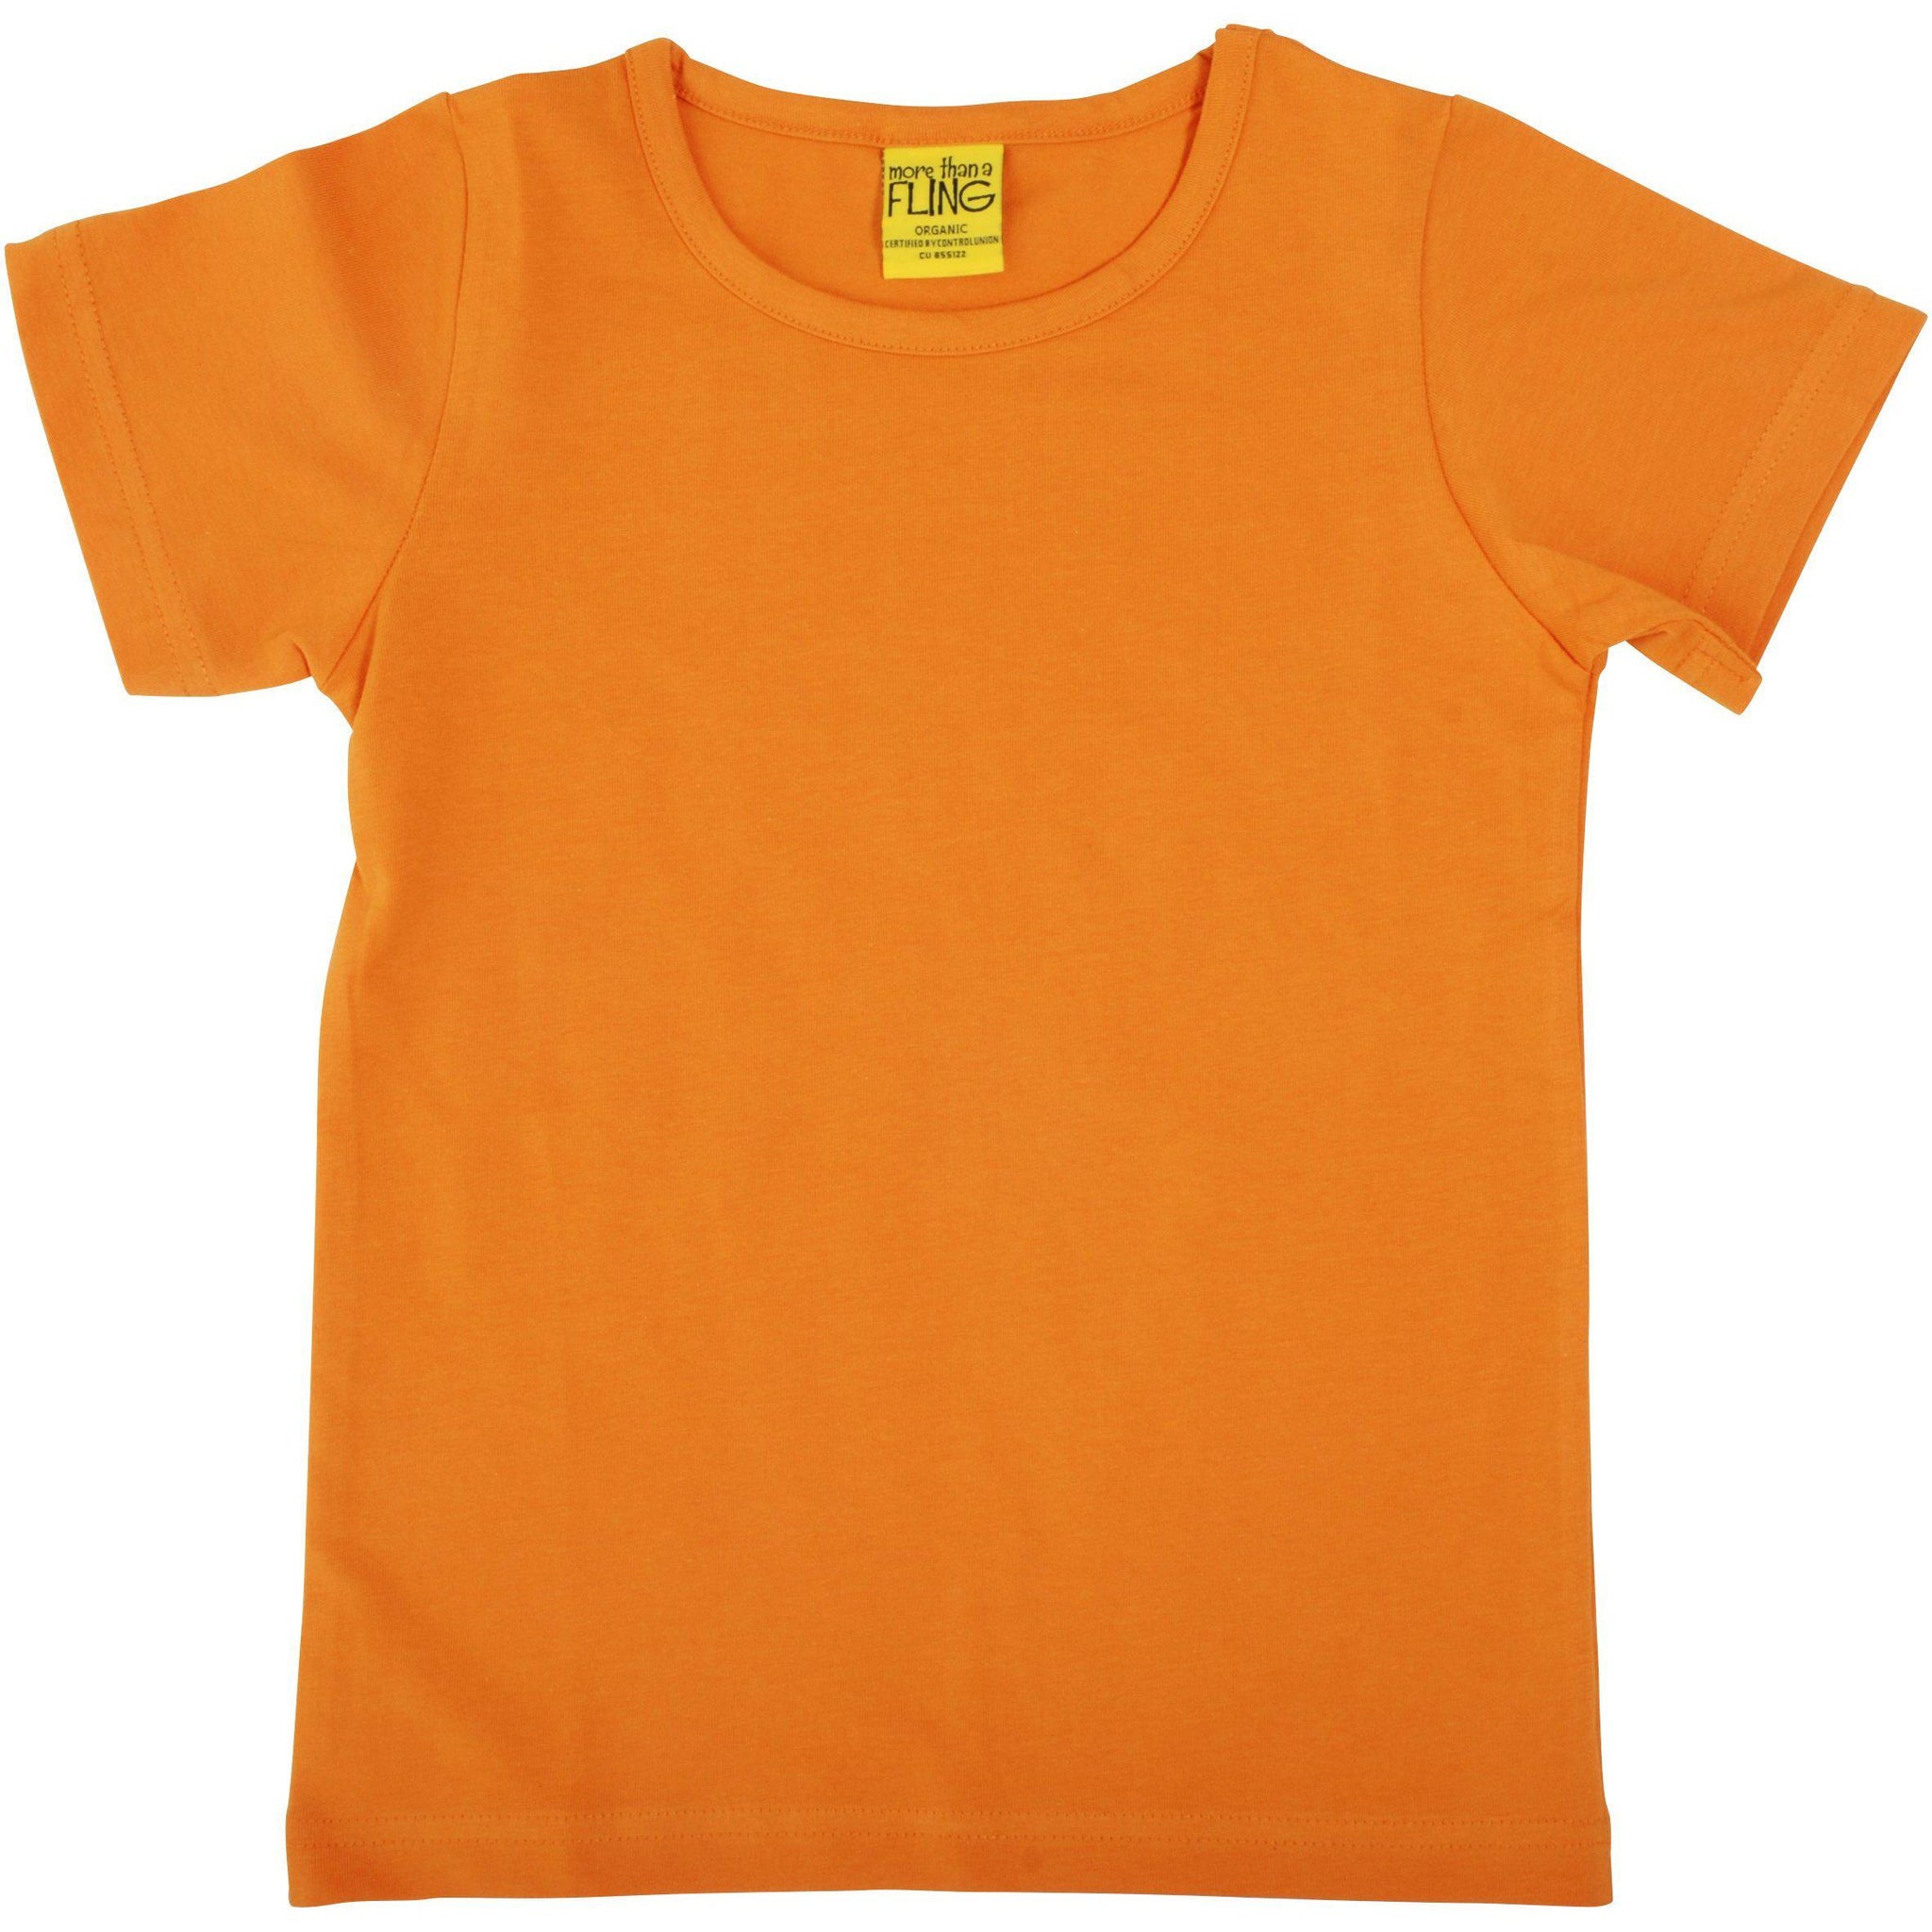 More than a Fling - Orange Womens Short Sleeve Top